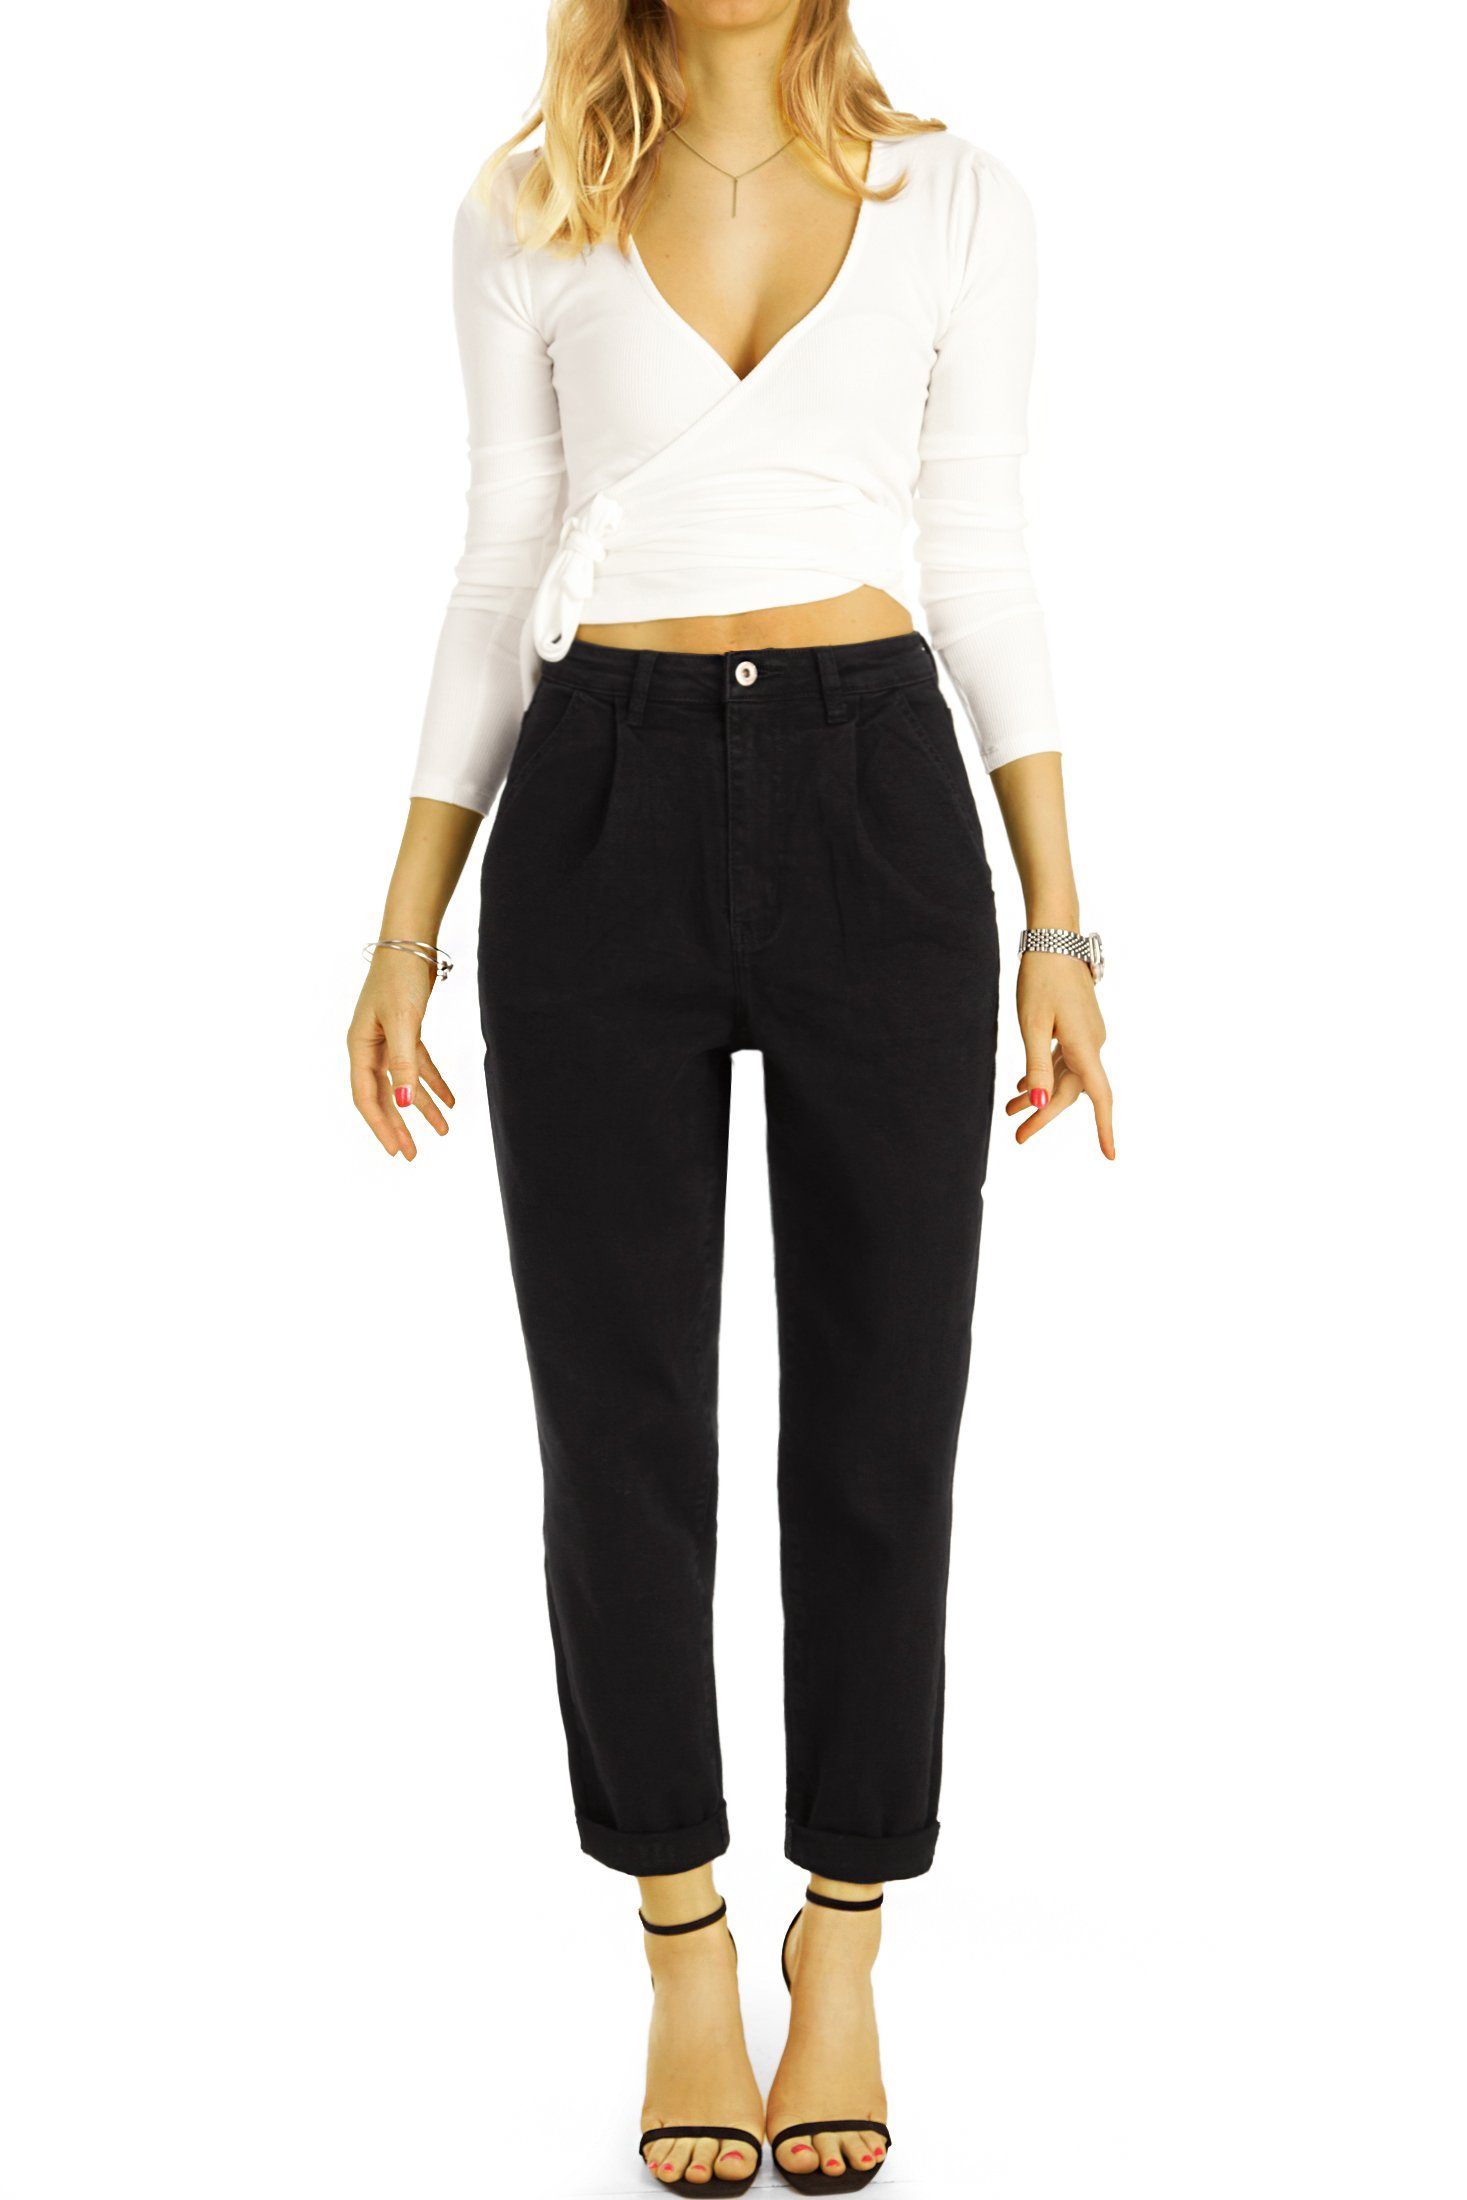 waist 5-Pocket-Style, - - styled j24g-4 Mom-Jeans be Mom Damen Waist Hose High mit Jeans Medium Stretch-Anteil beige